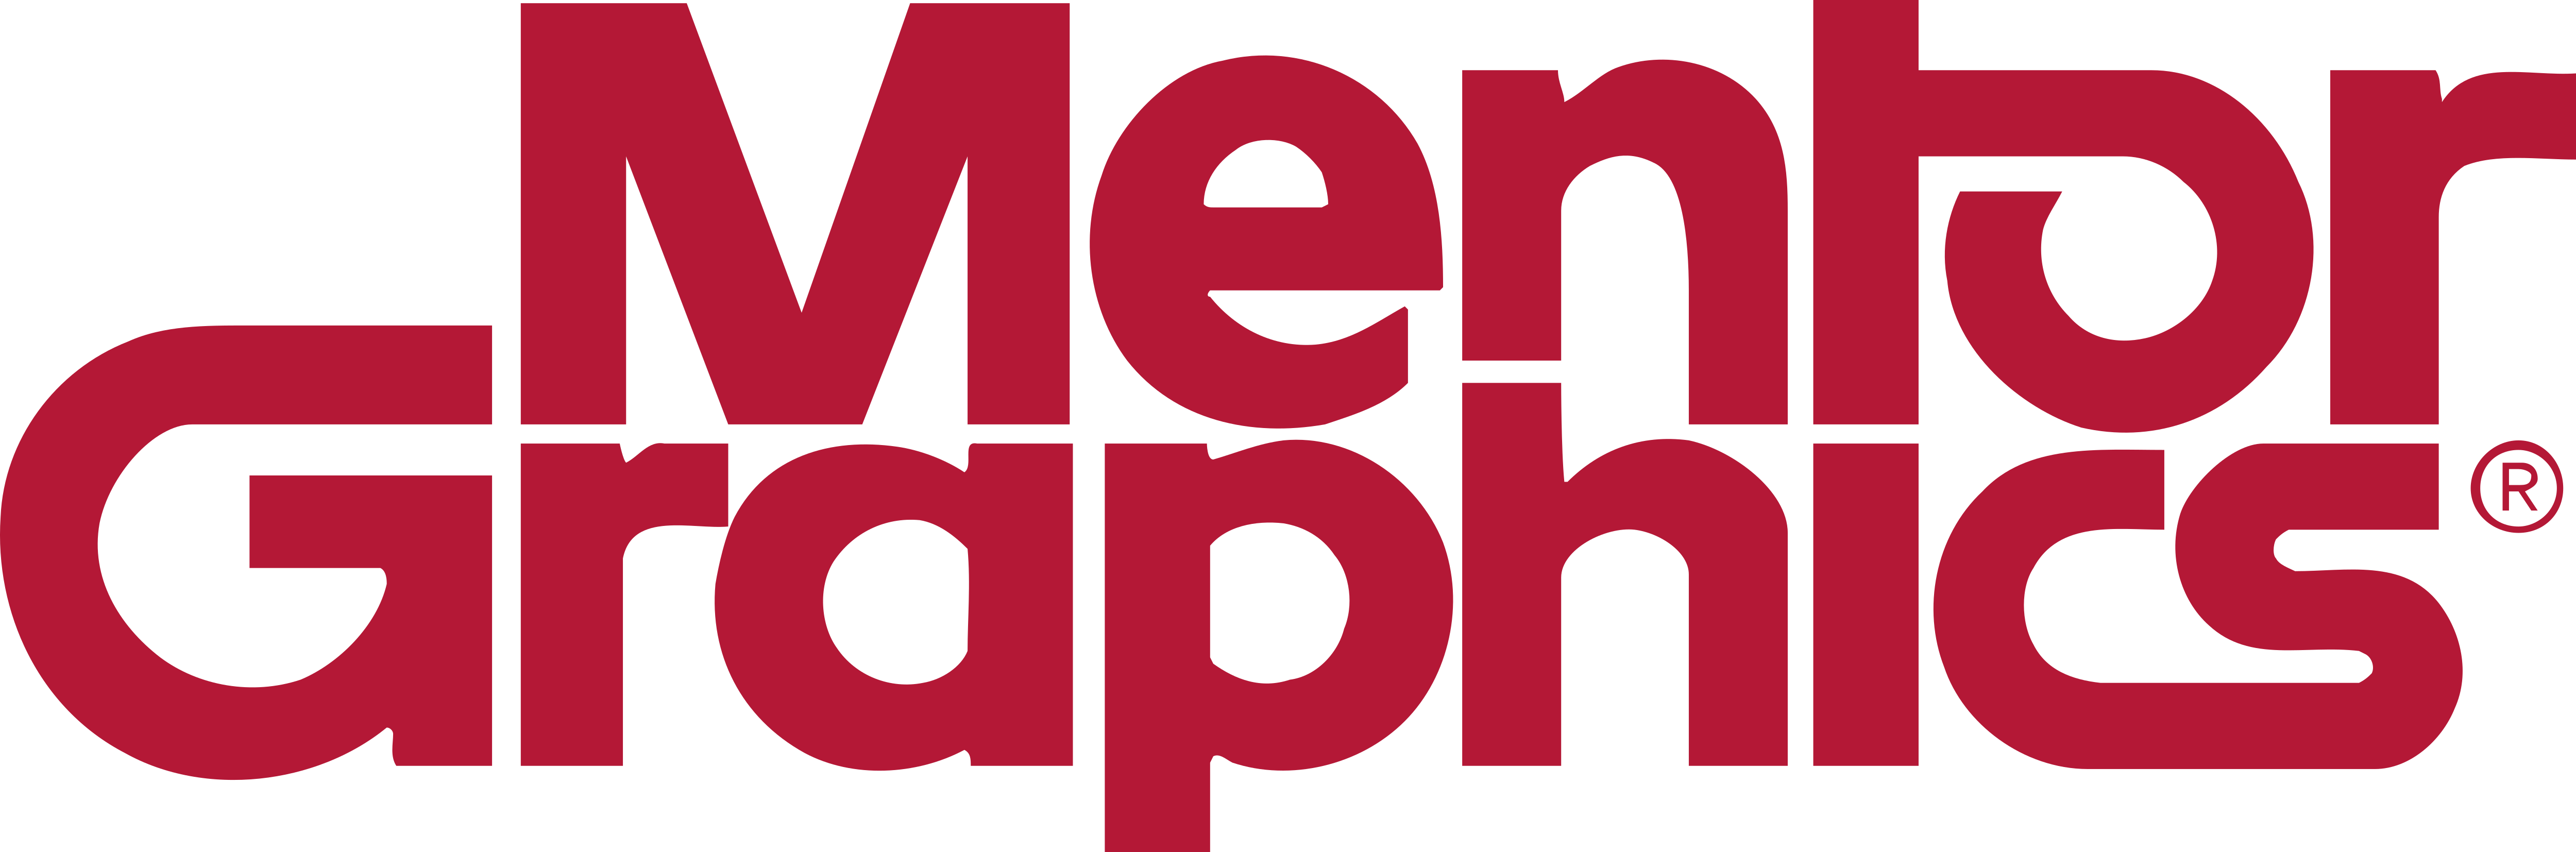 Mentor Graphics Logos